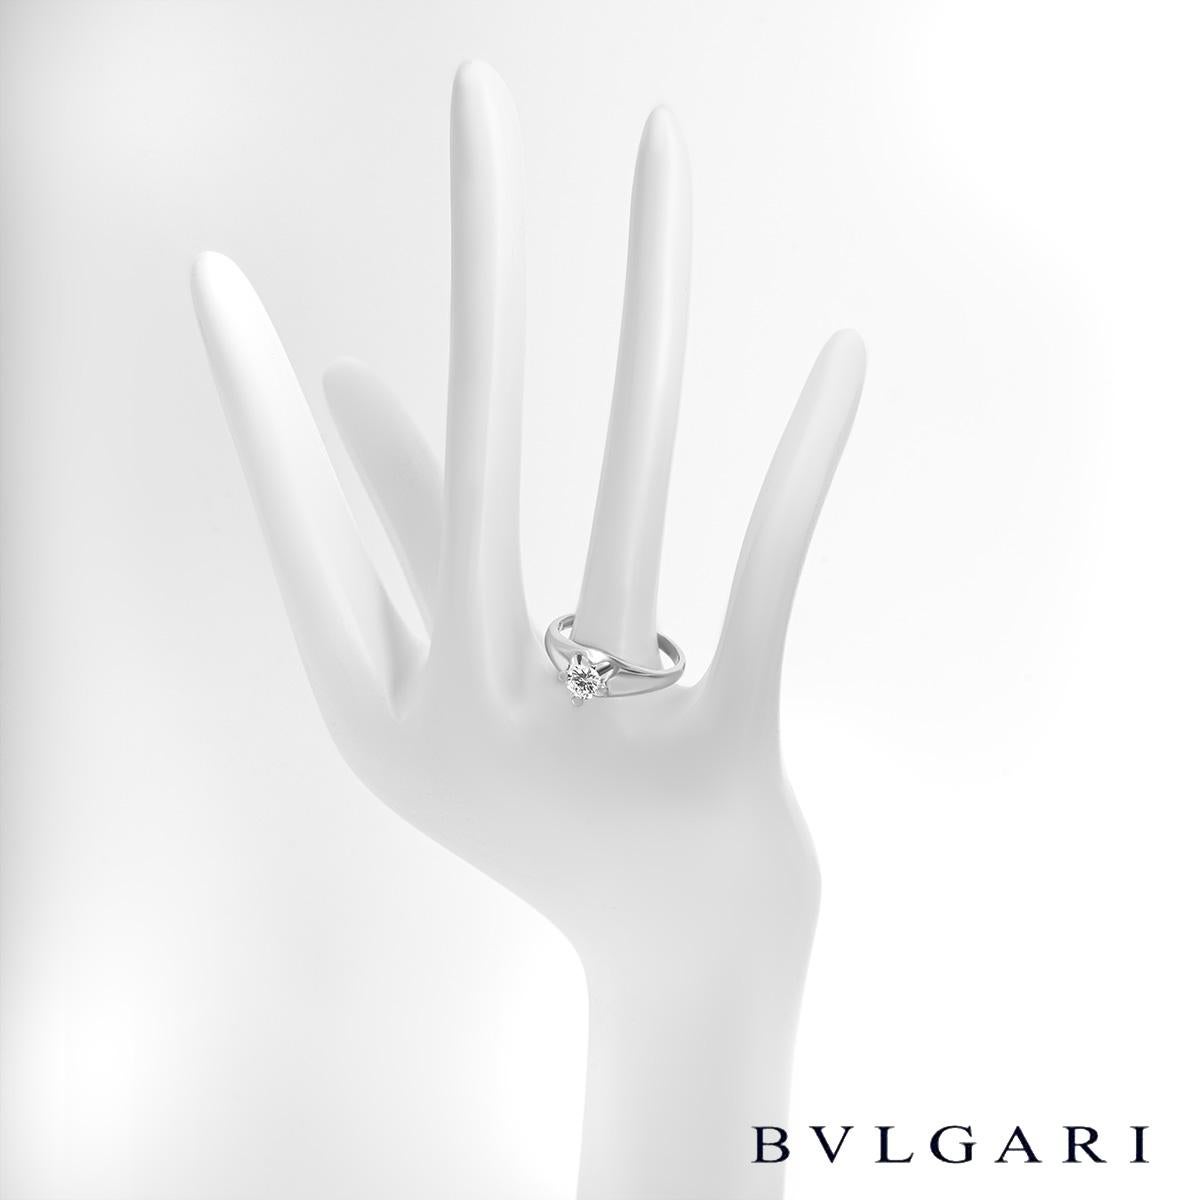 Bvlgari Round Brilliant Cut Diamond Ring in Platinum 0.35ct G/VVS2 In Excellent Condition For Sale In London, GB